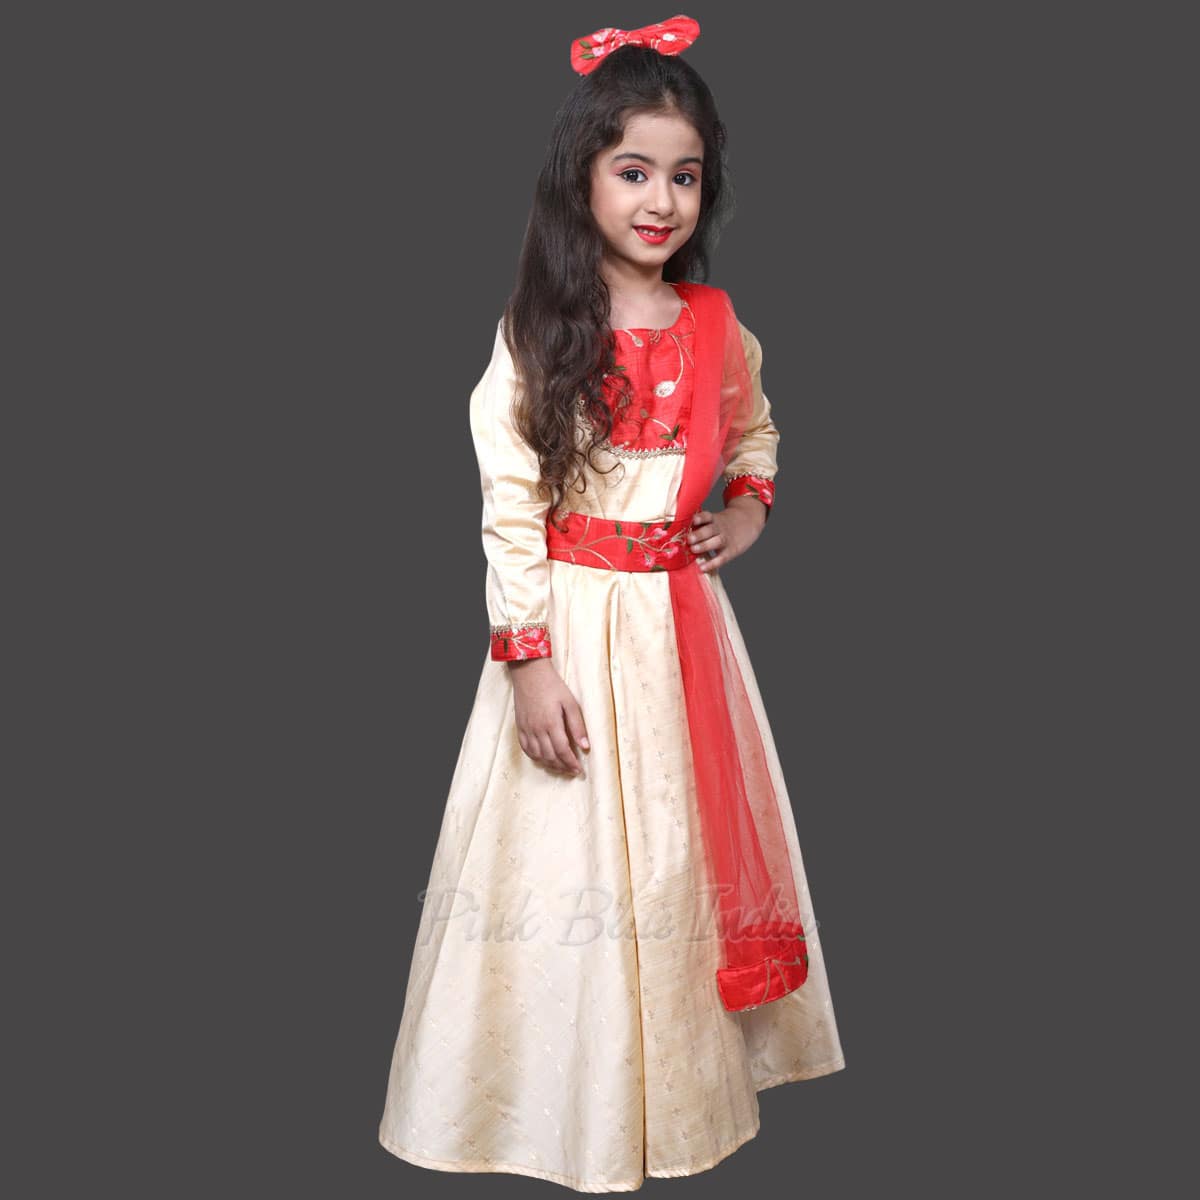 Beige Dress - Buy Beige Long Gown Wedding Dress in India